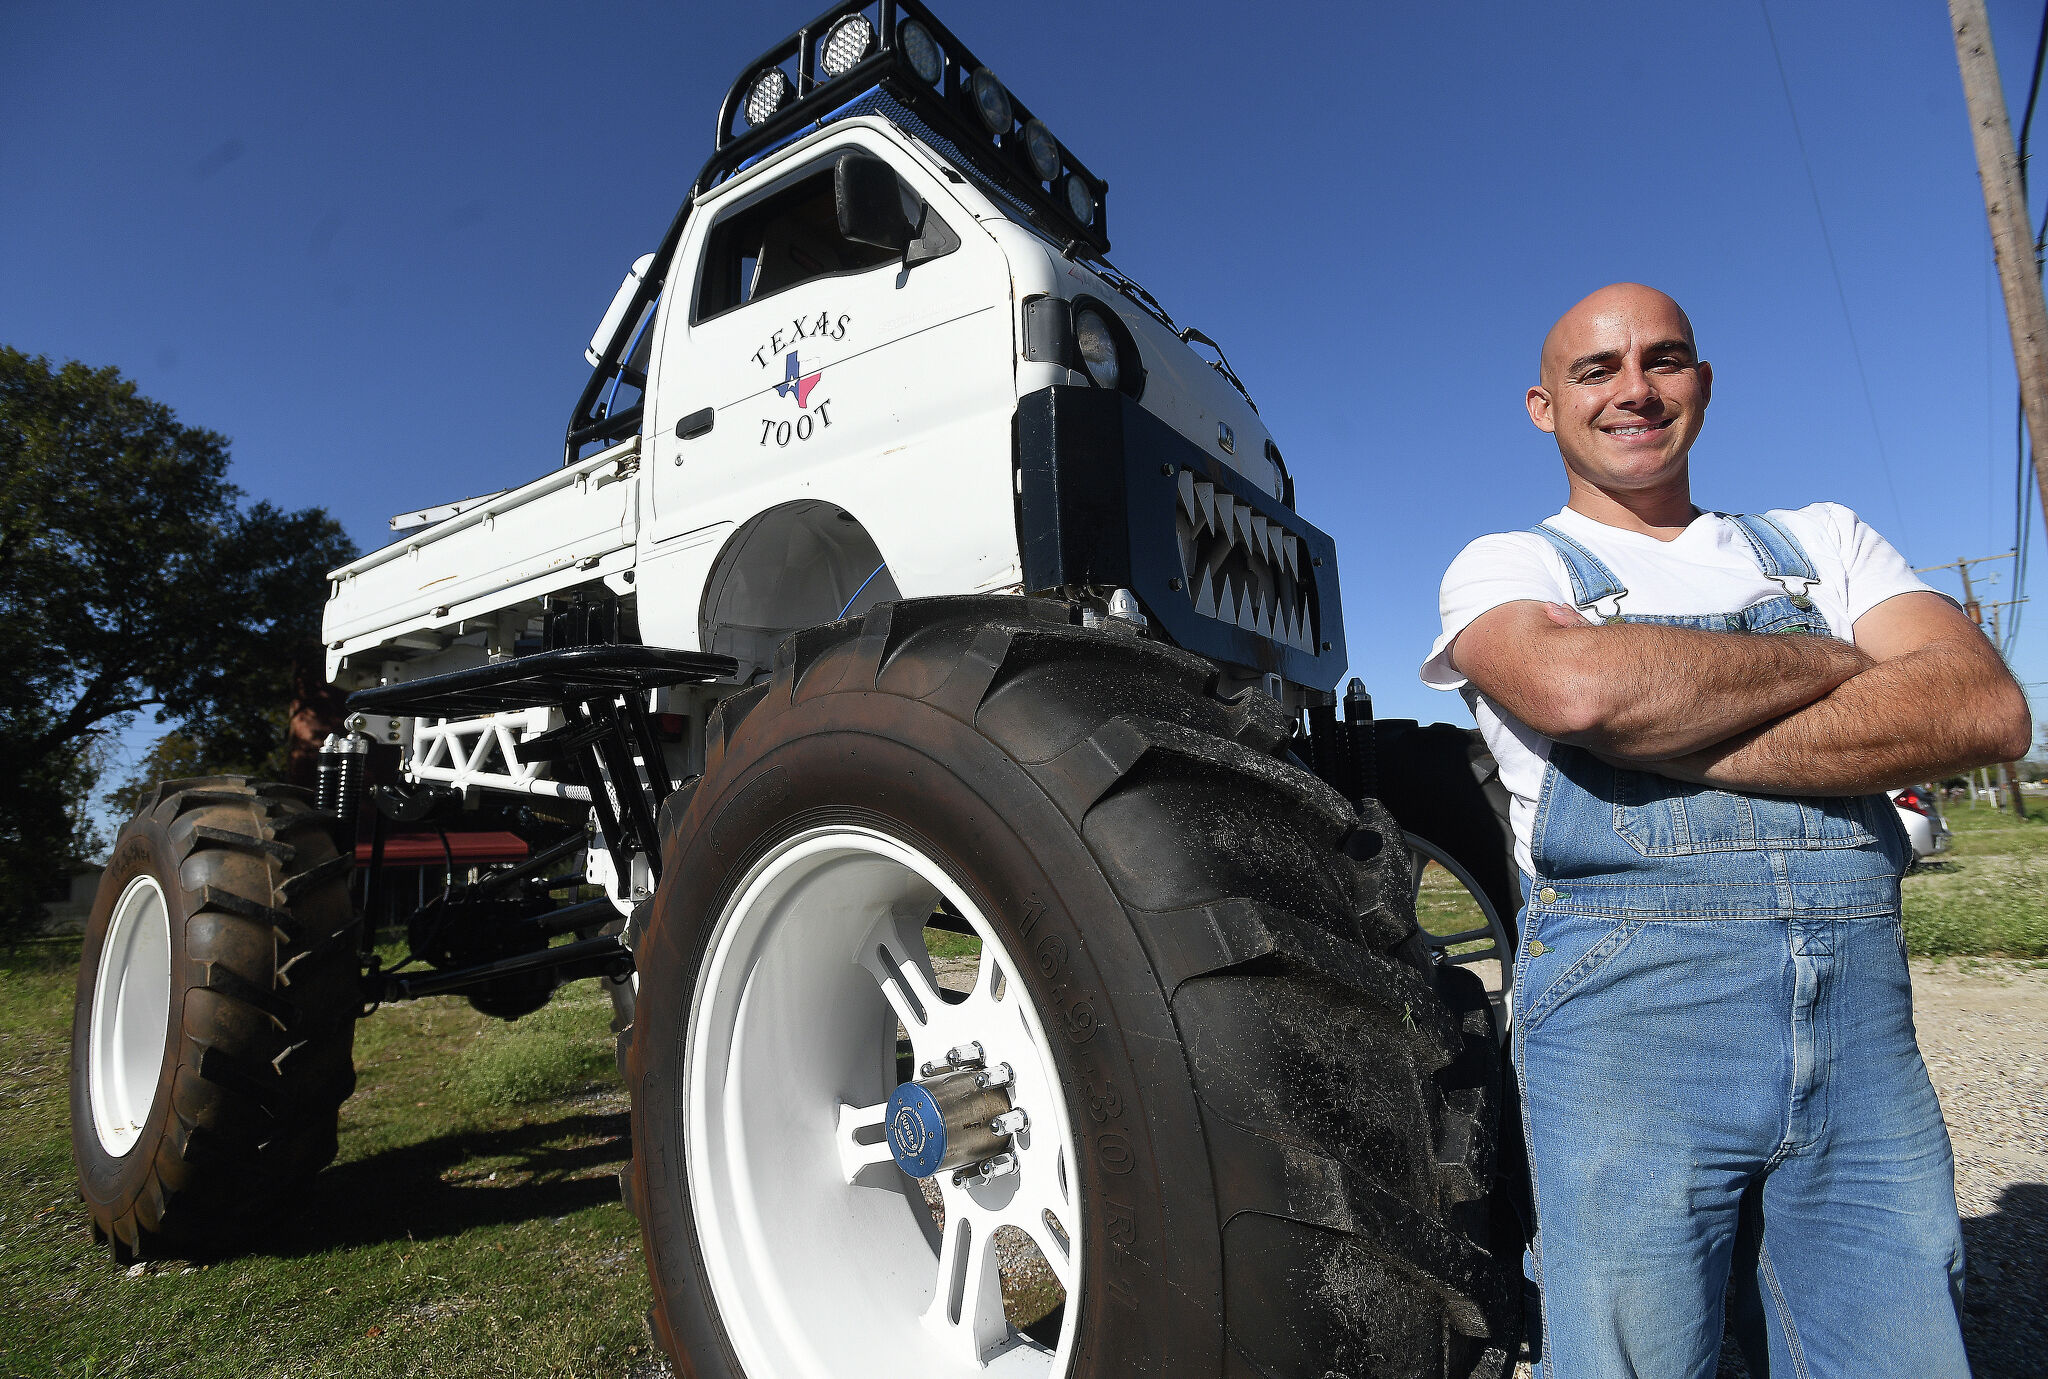 This Autozam Scrum Monster Truck Wins the Hot Wheels Legends Tour